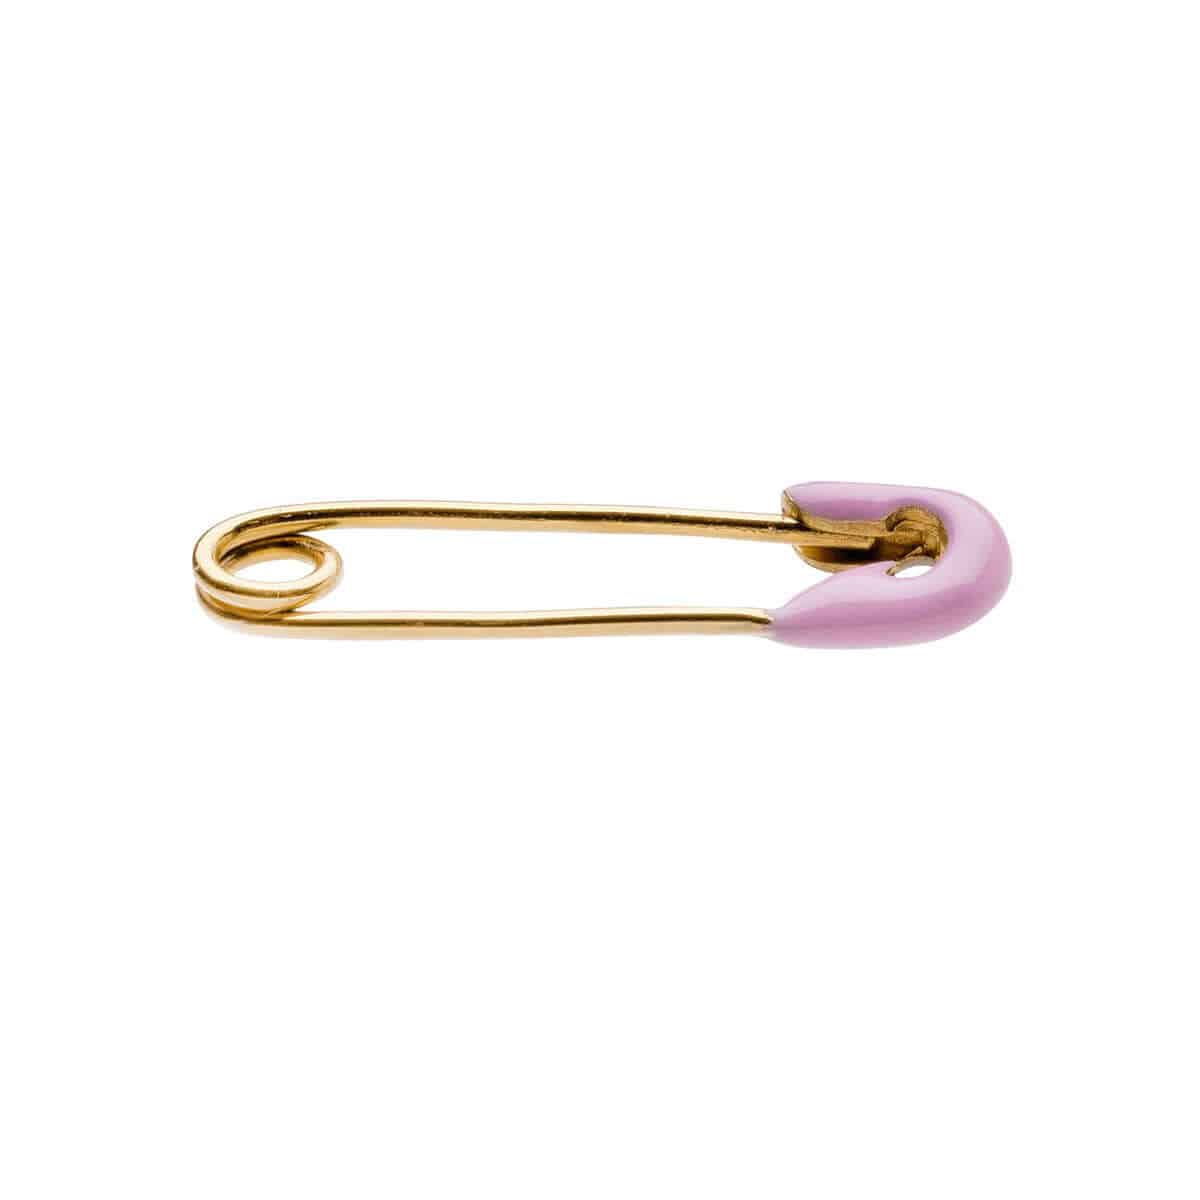 Pink Enamel Safety Pin Earring - Eye M Safety Pins - Ileana Makri store